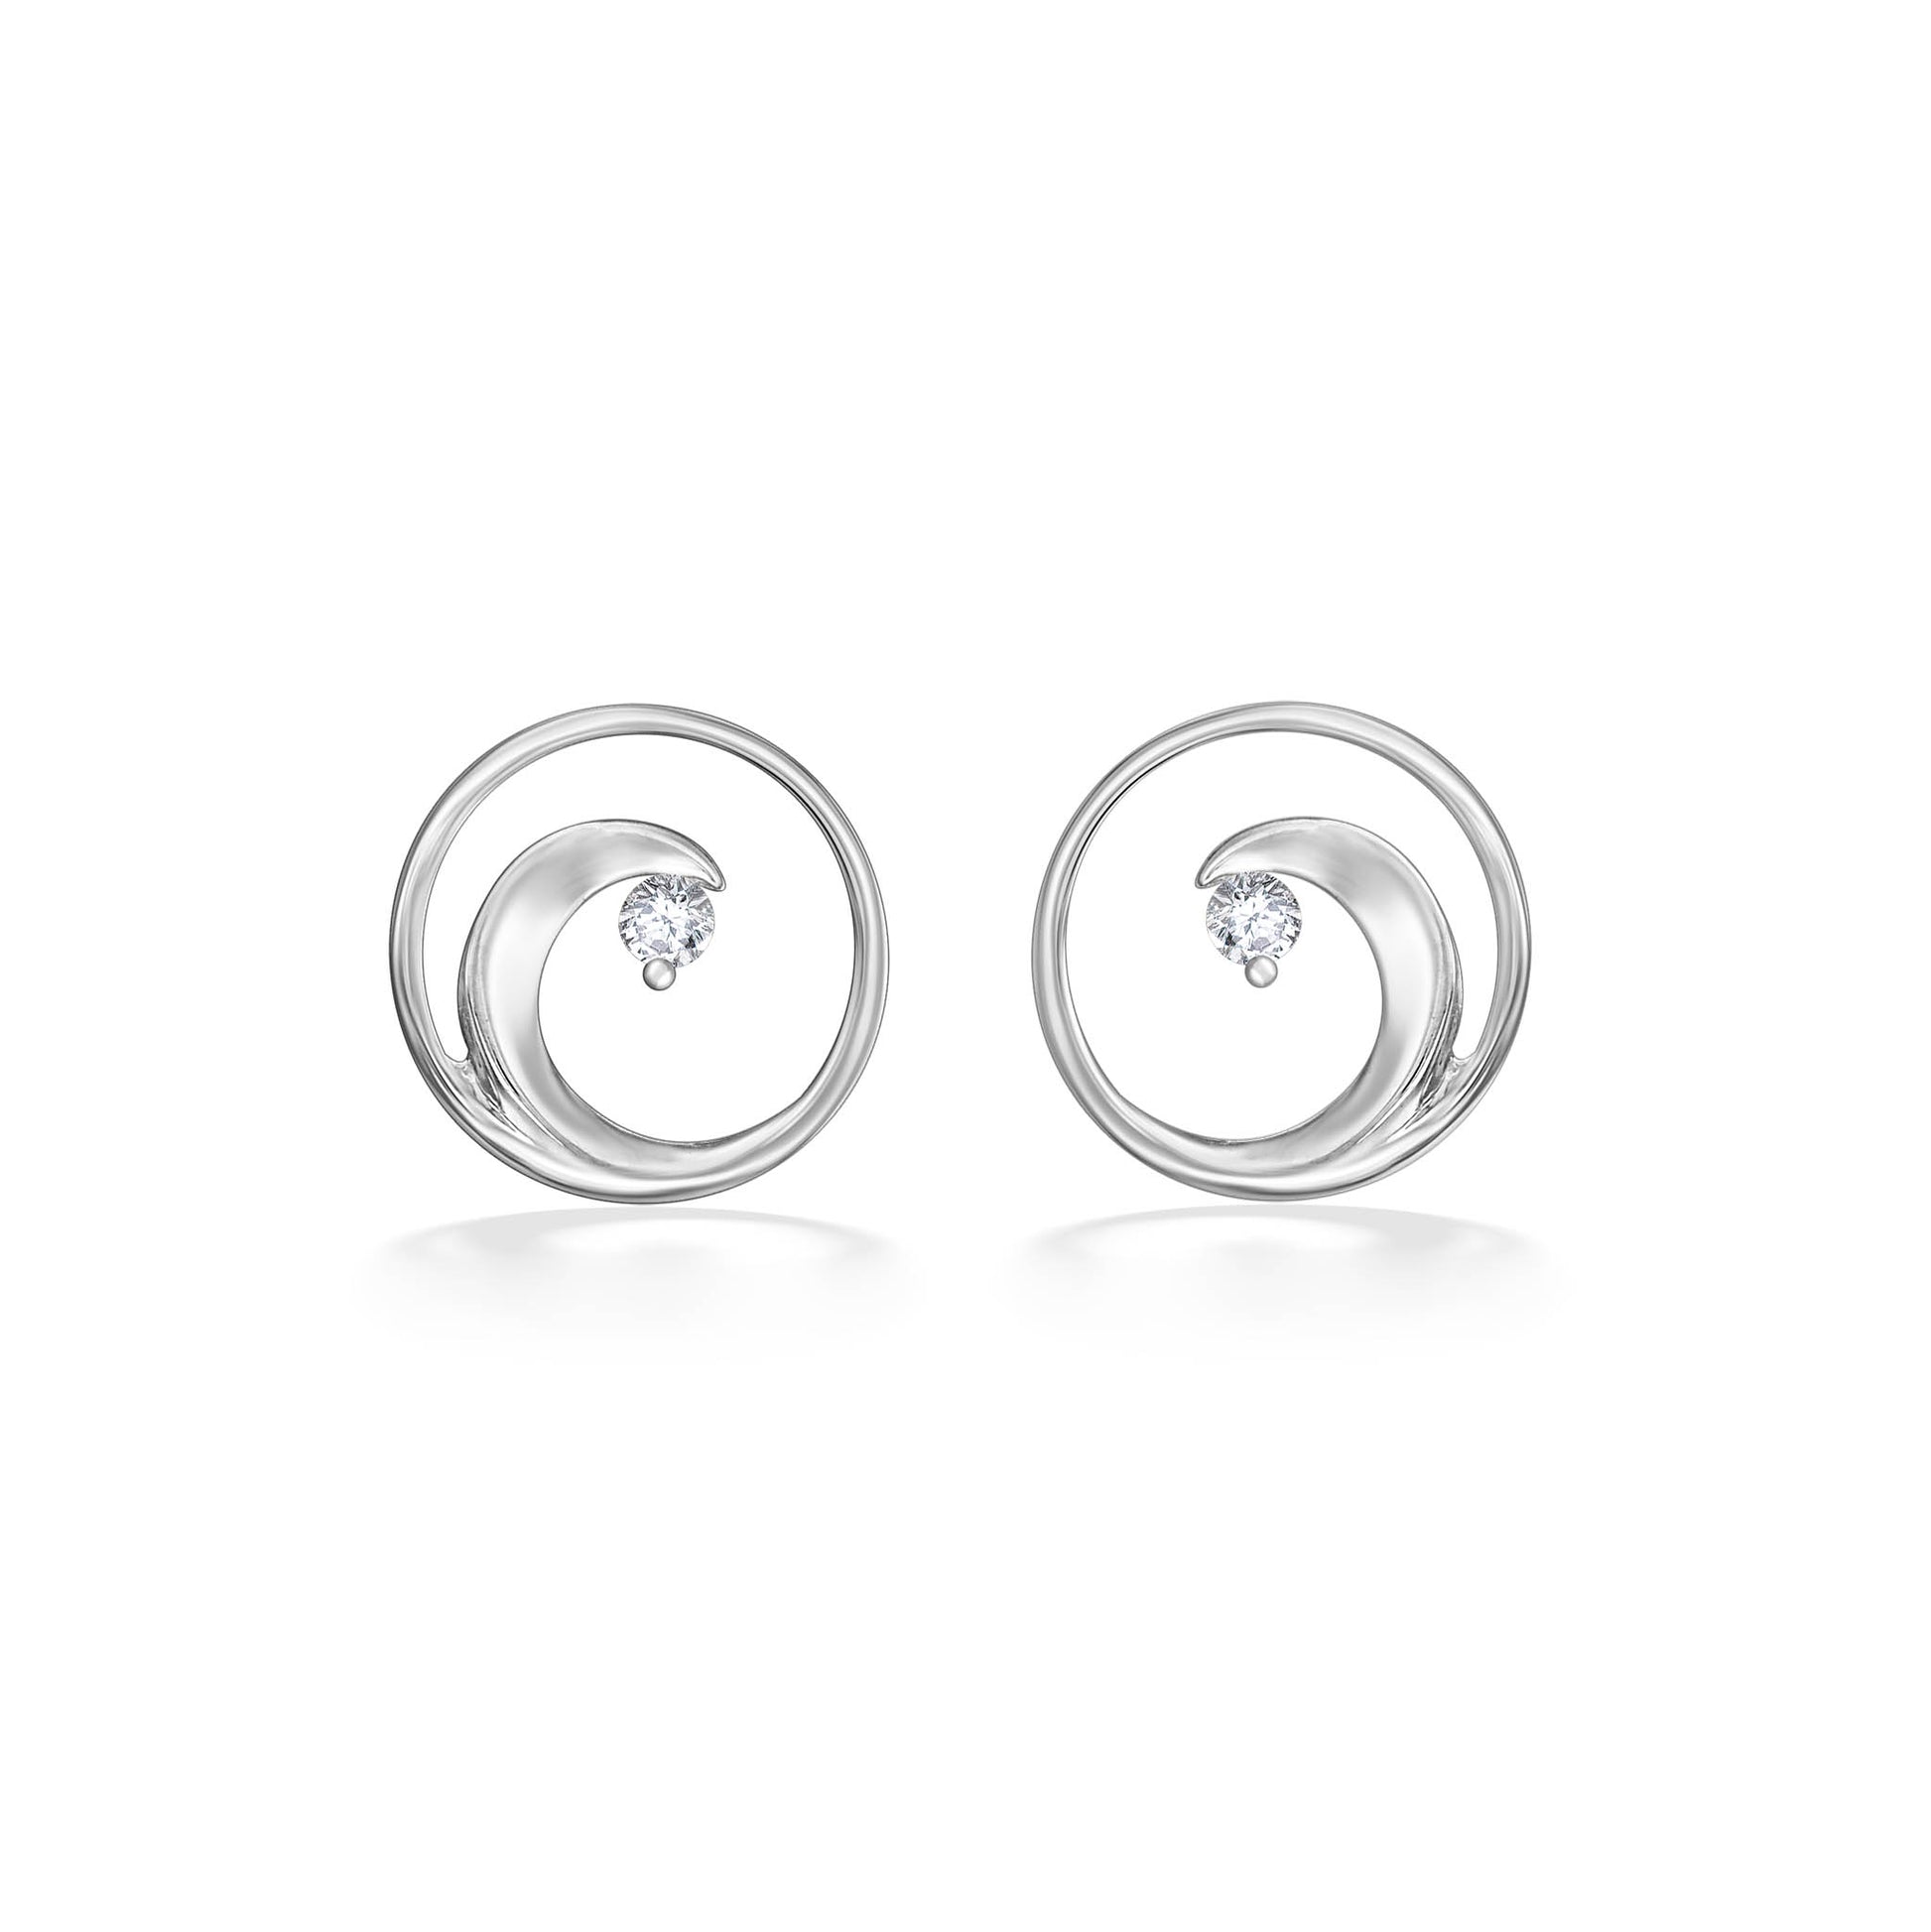 44345 - 14K White Gold - Na Keiki (Children's) Wave Earrings